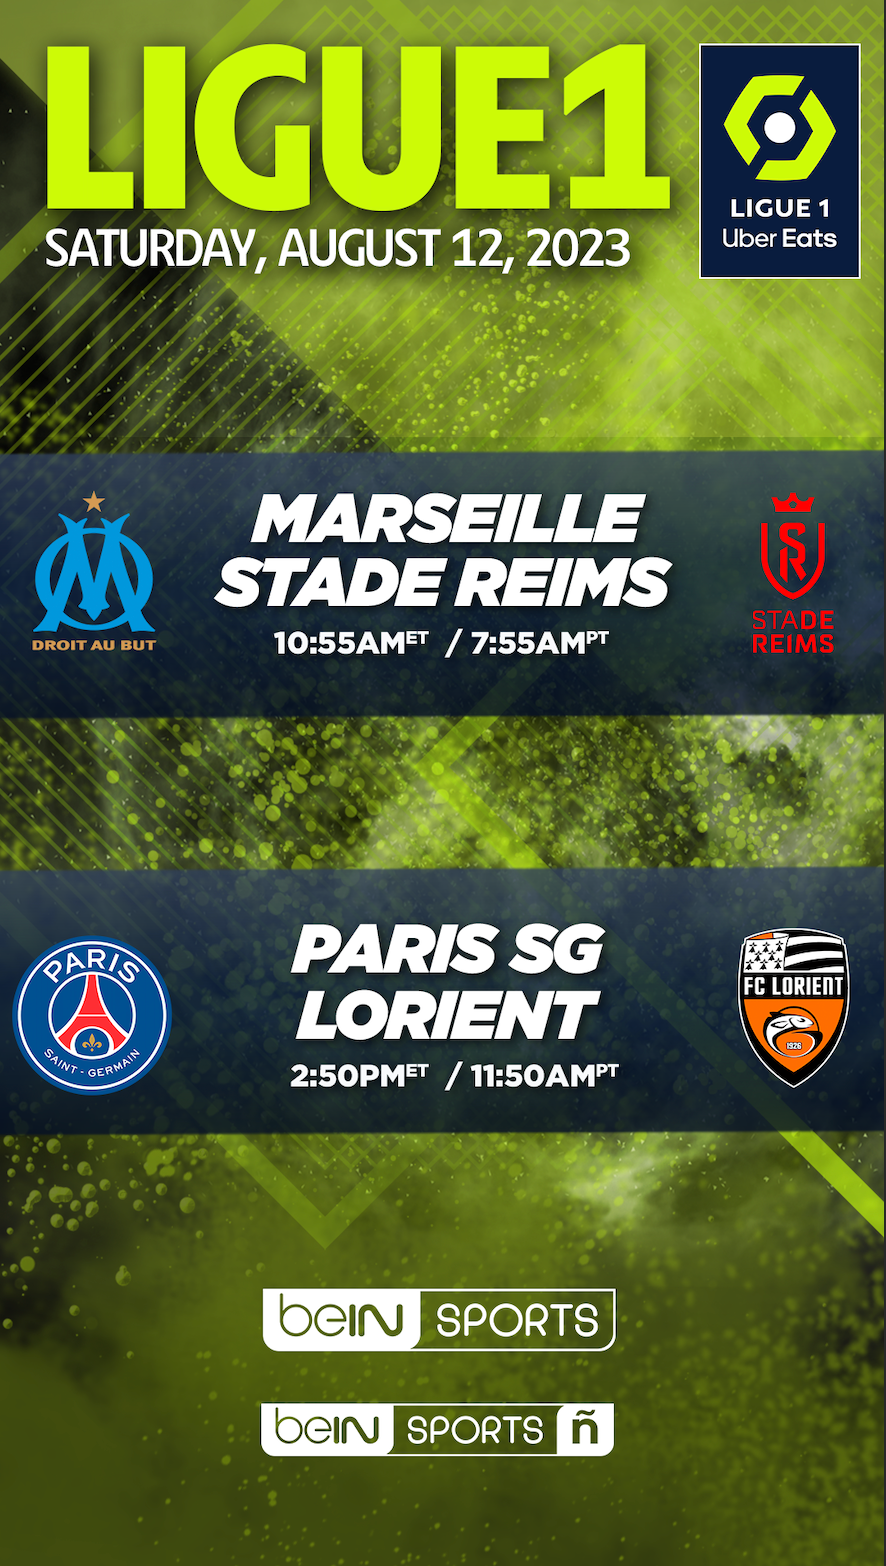 Ligue 1 is back